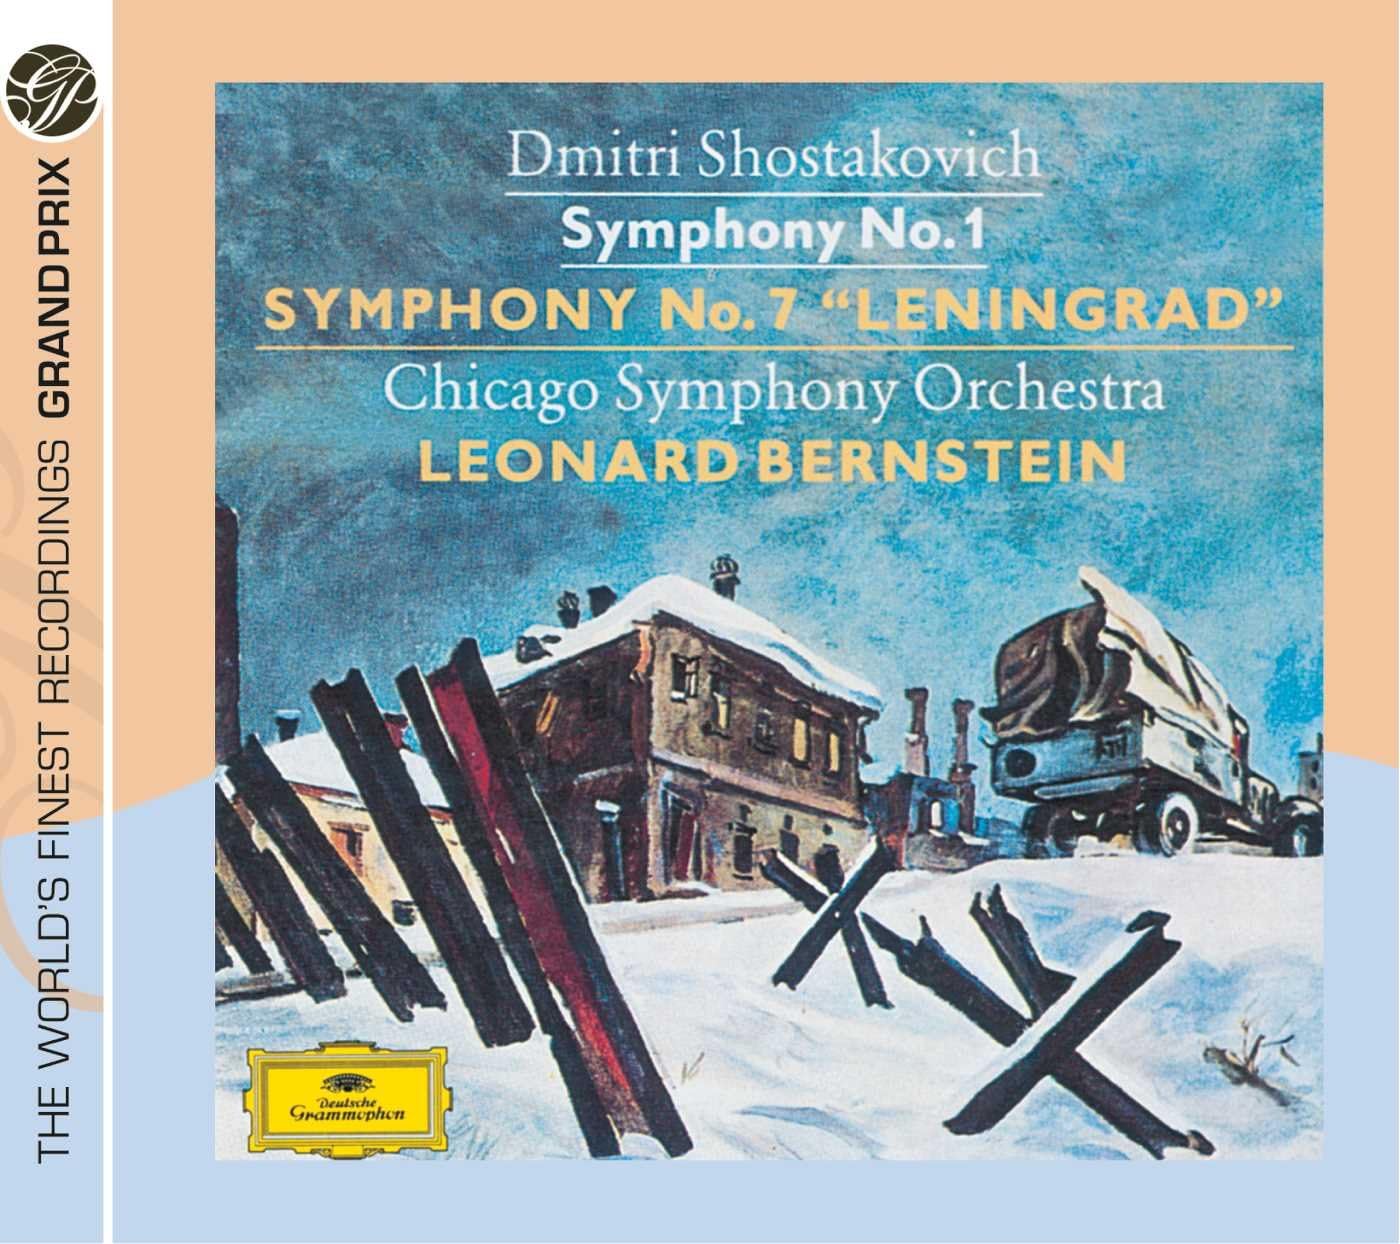 Dmitri Shostakovich: Symphony No. 1, Symphony No. 7 "Leningrad" | Chicago Symphony Orchestra, Leonard Bernstein